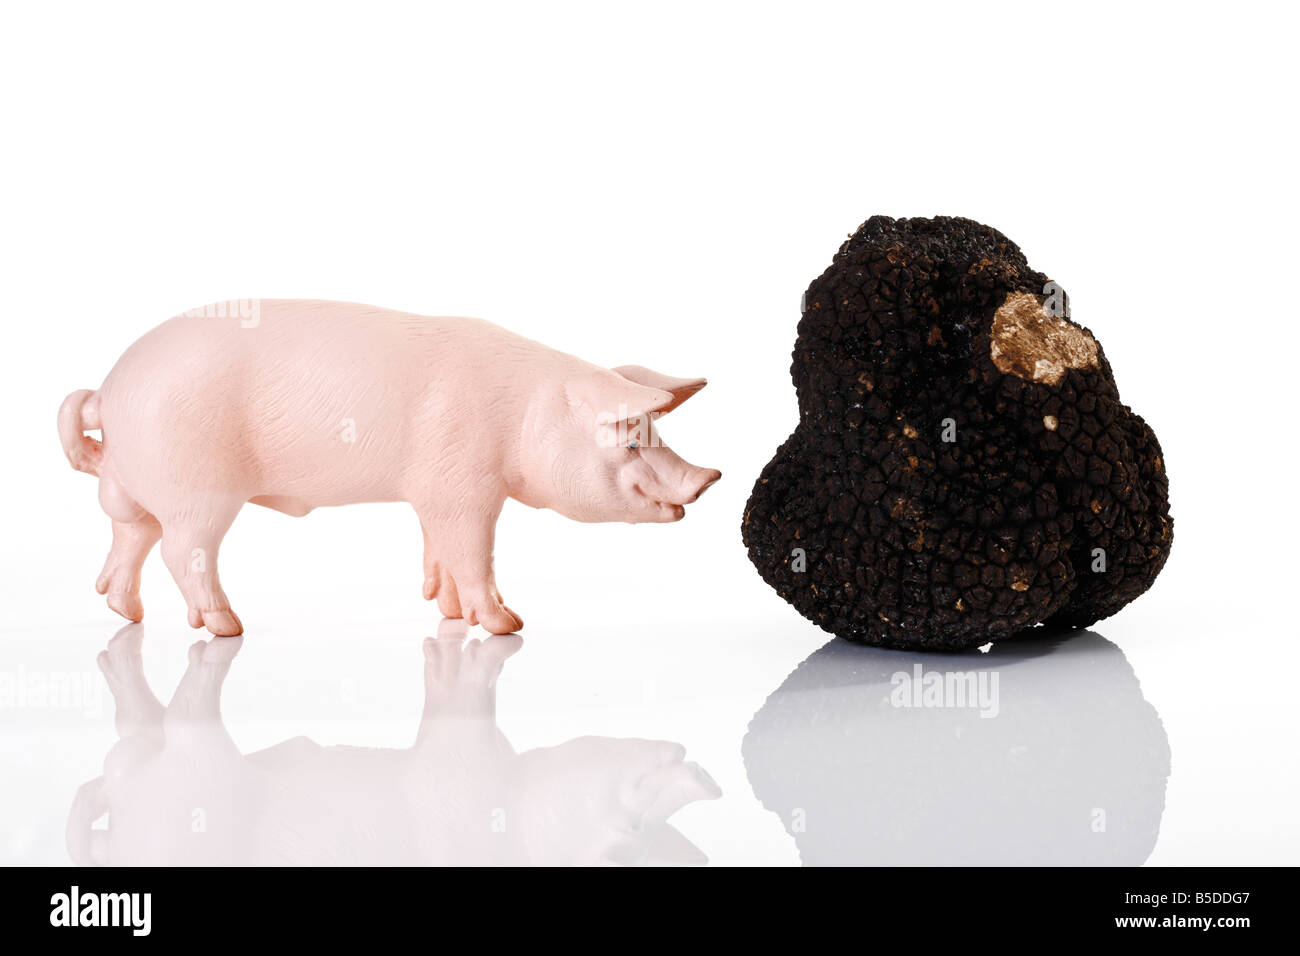 Pig figurine and black truffle Stock Photo